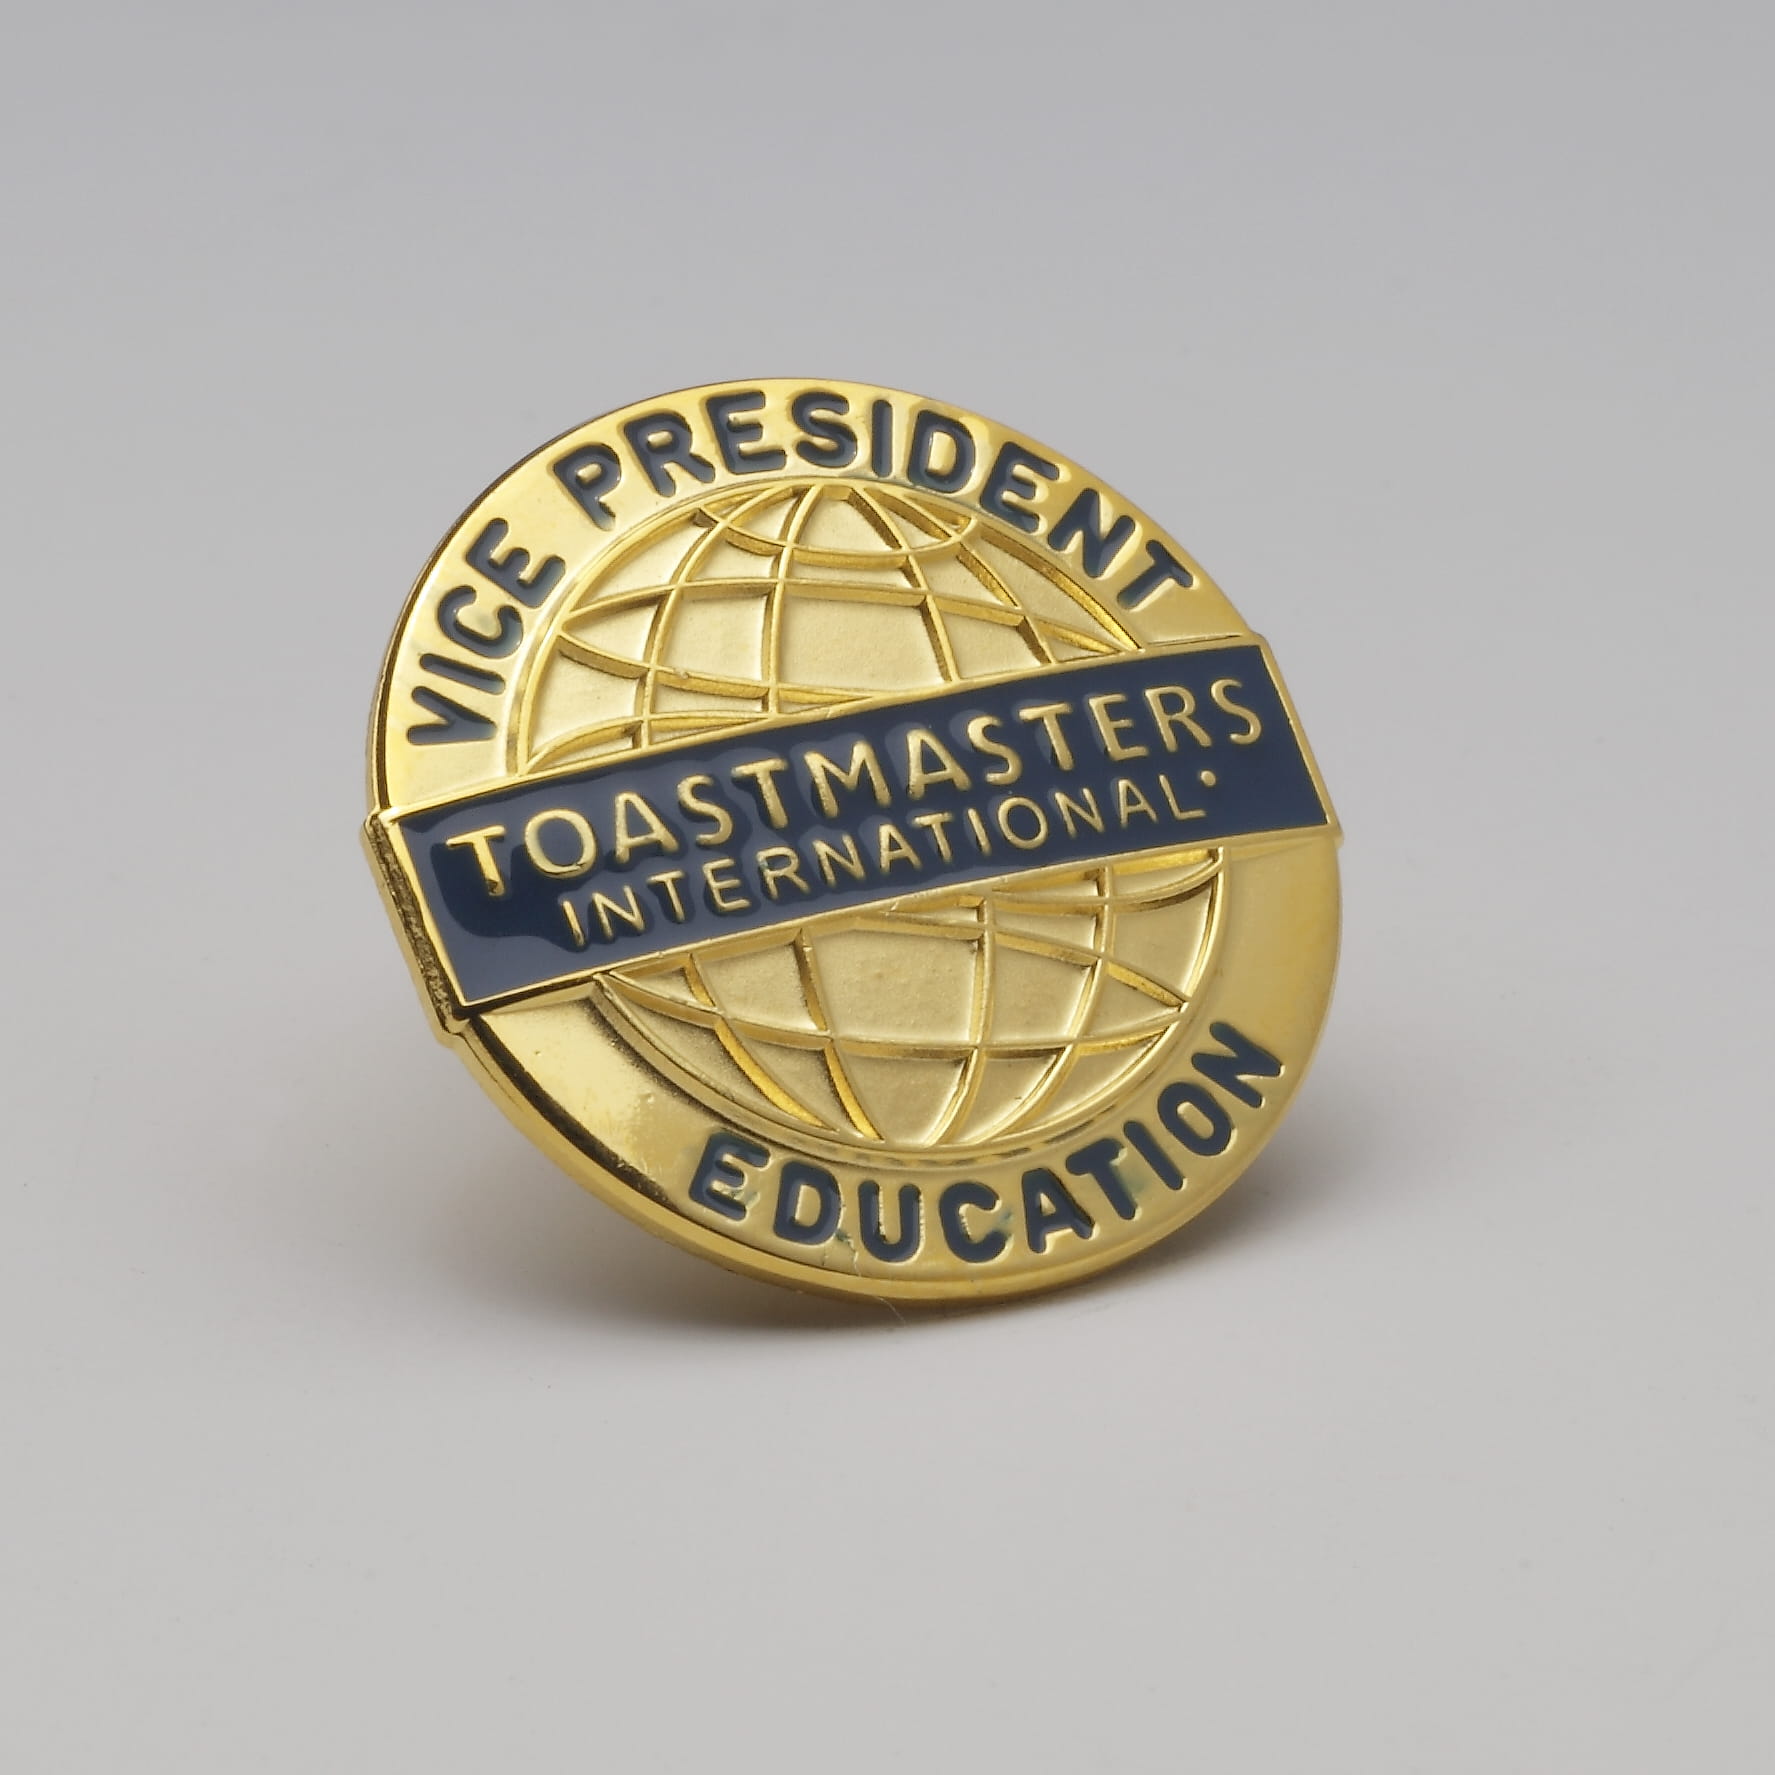 Vice President Education Pin